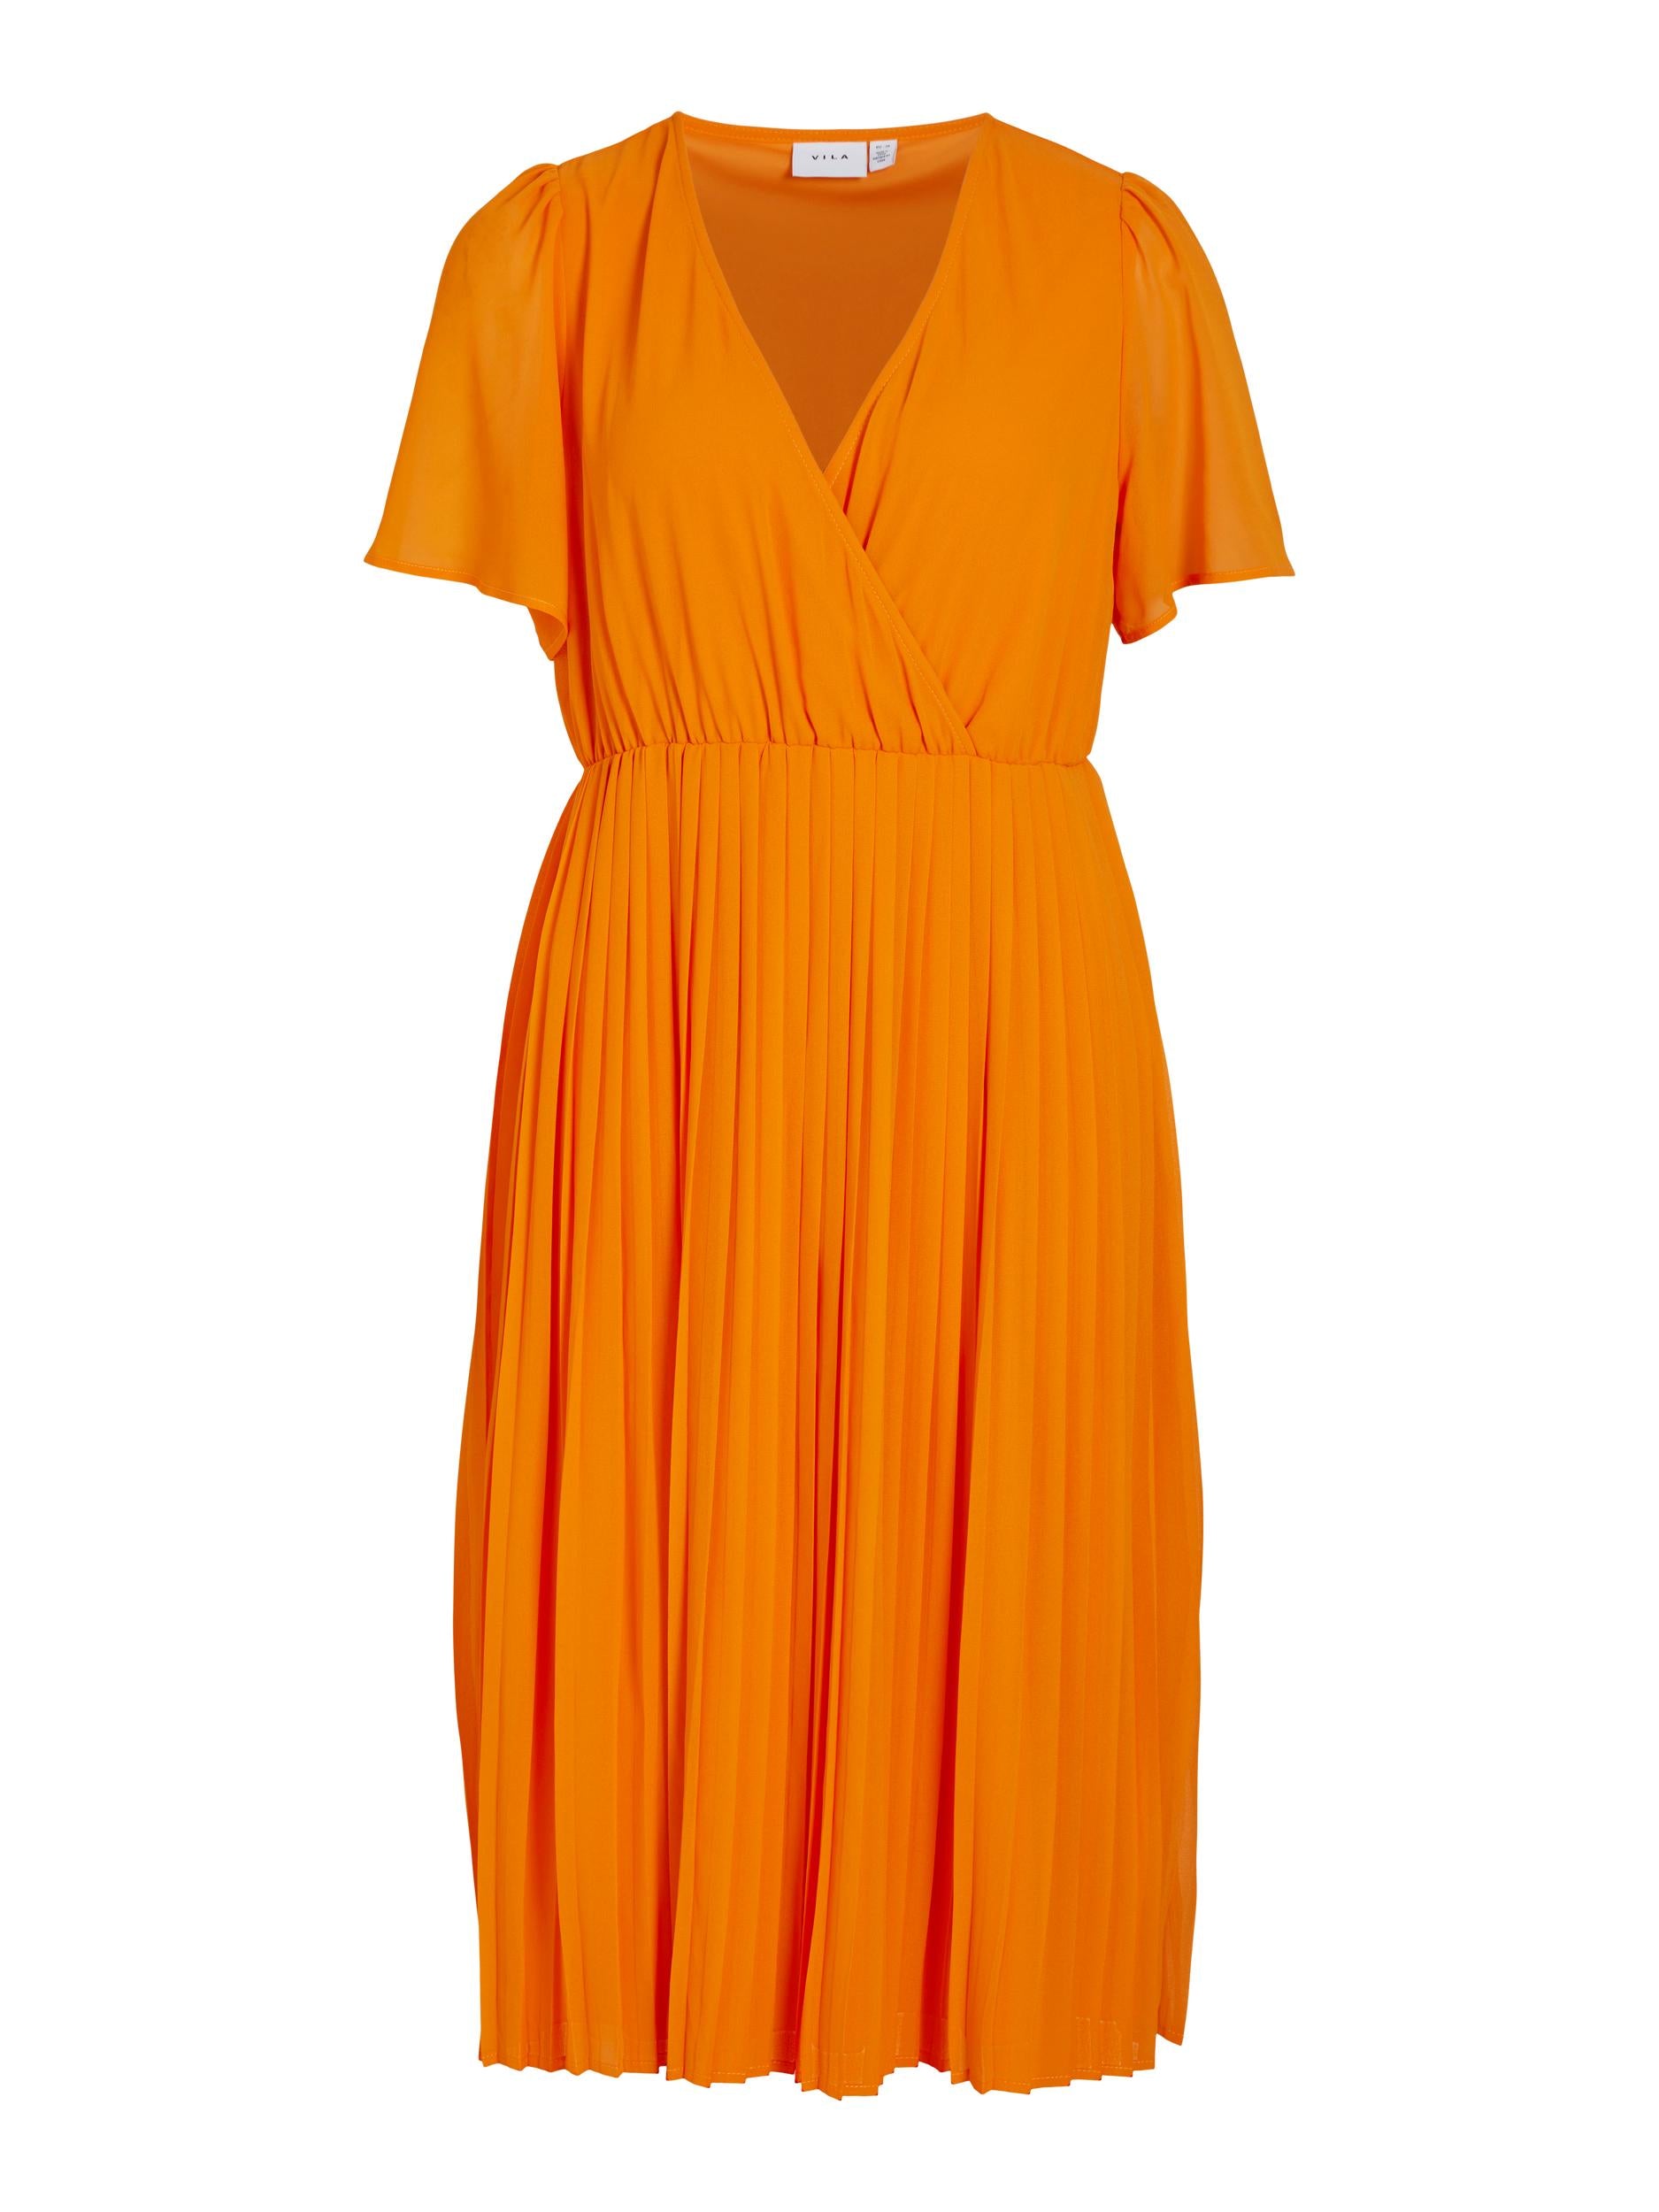 Janelle Faux Wrap Dress (Sun Orange)